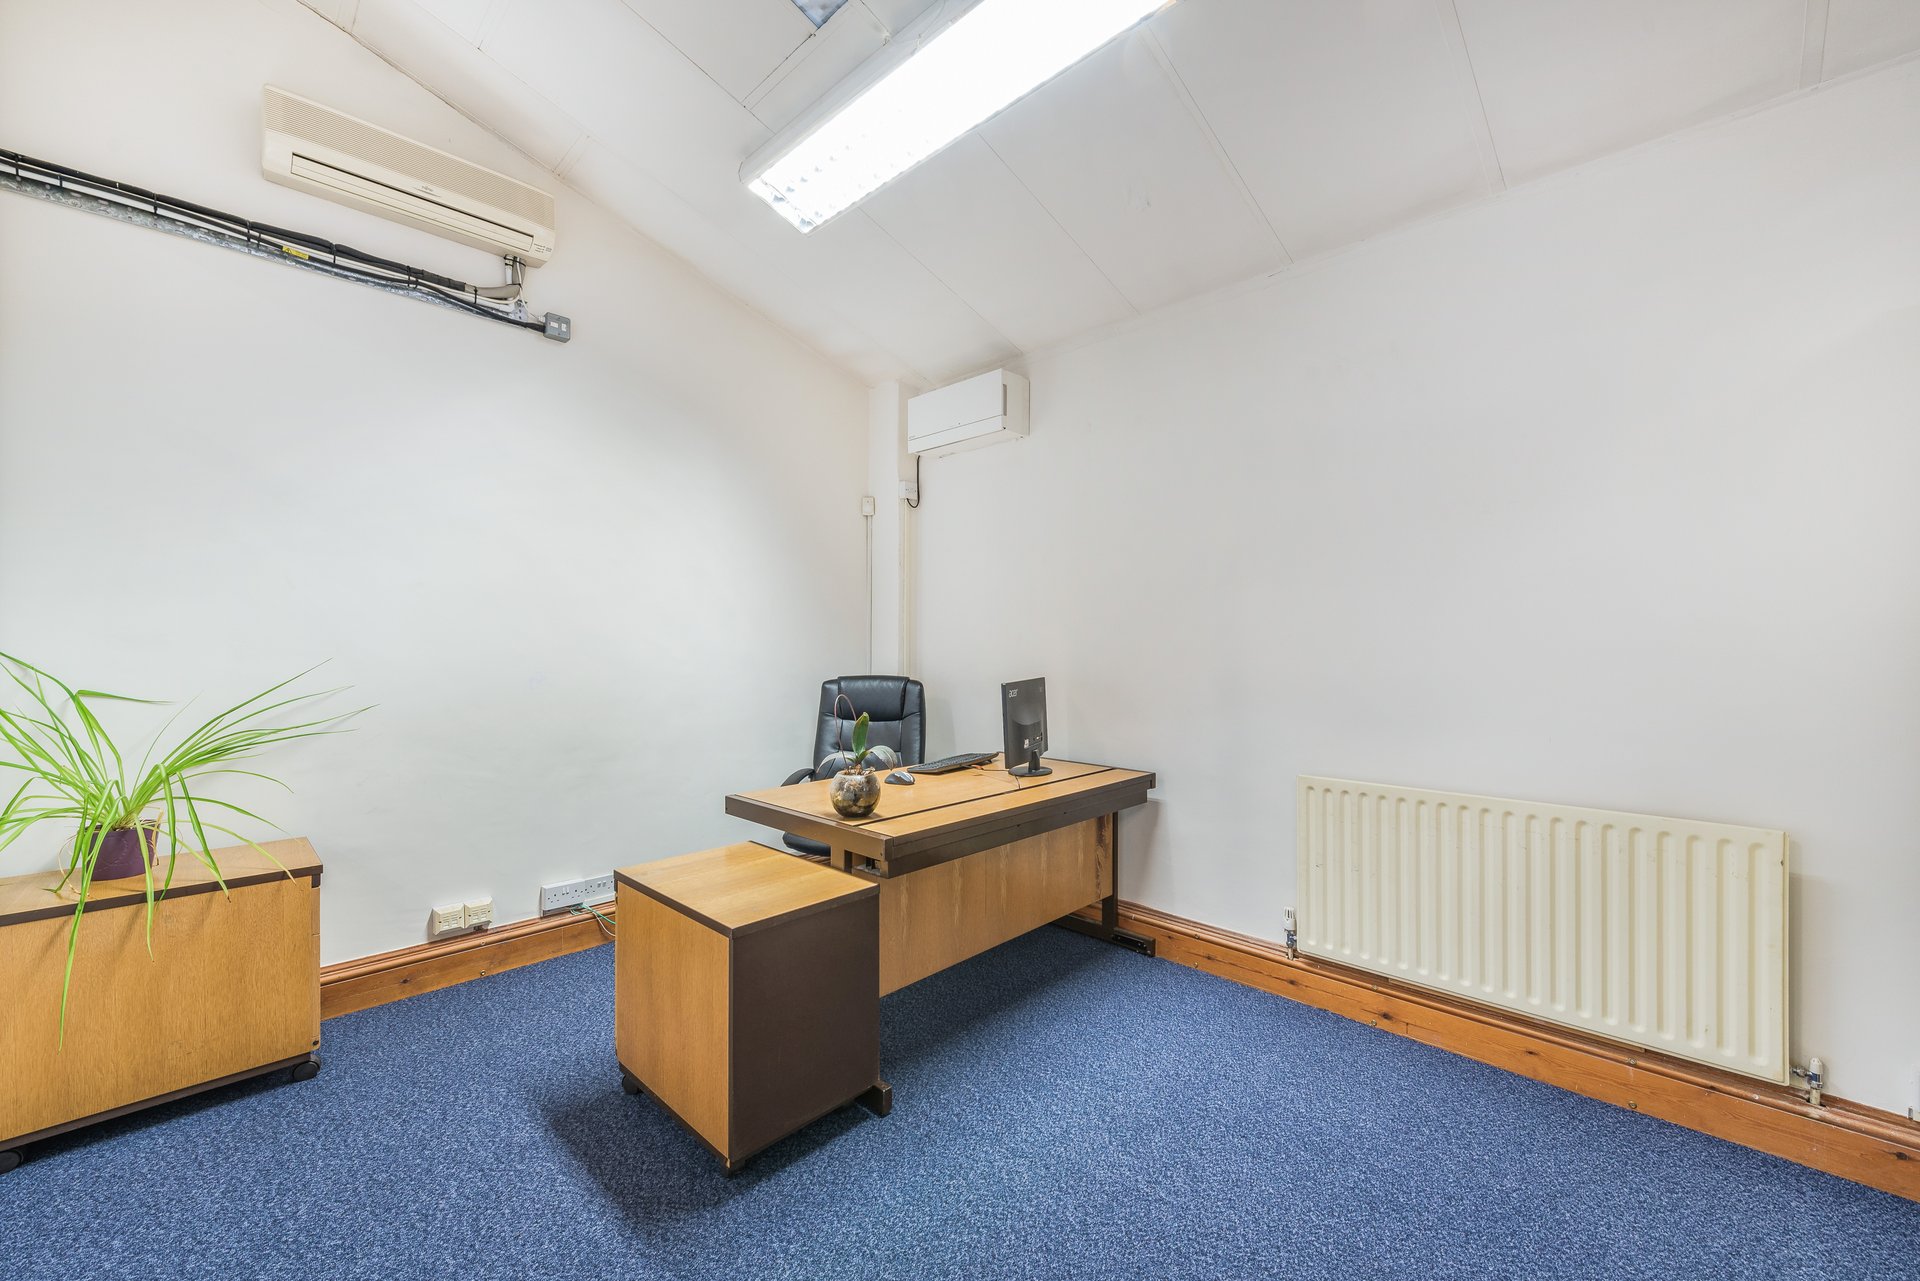 Interior of Balham Clapham Shared Office Co-working